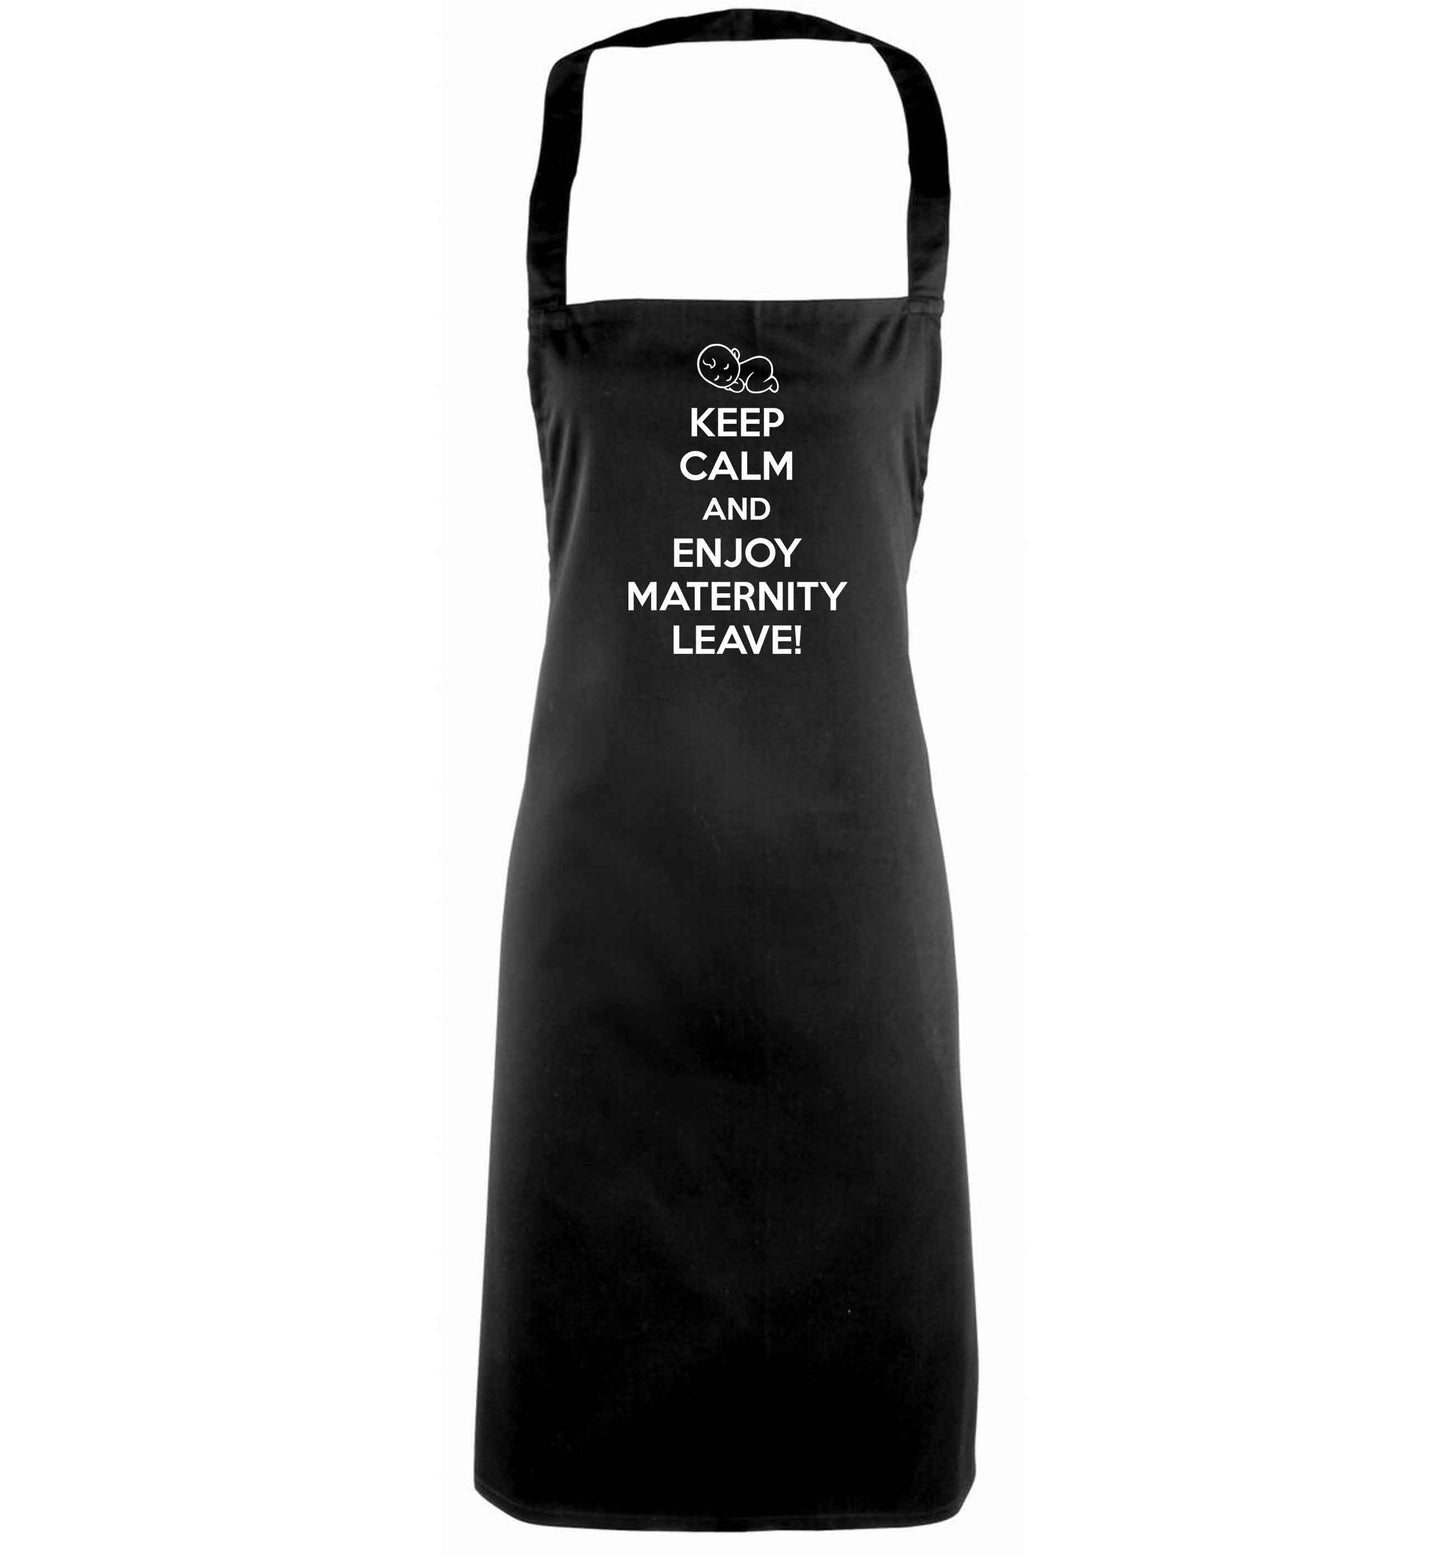 Keep calm and enjoy maternity leave black apron